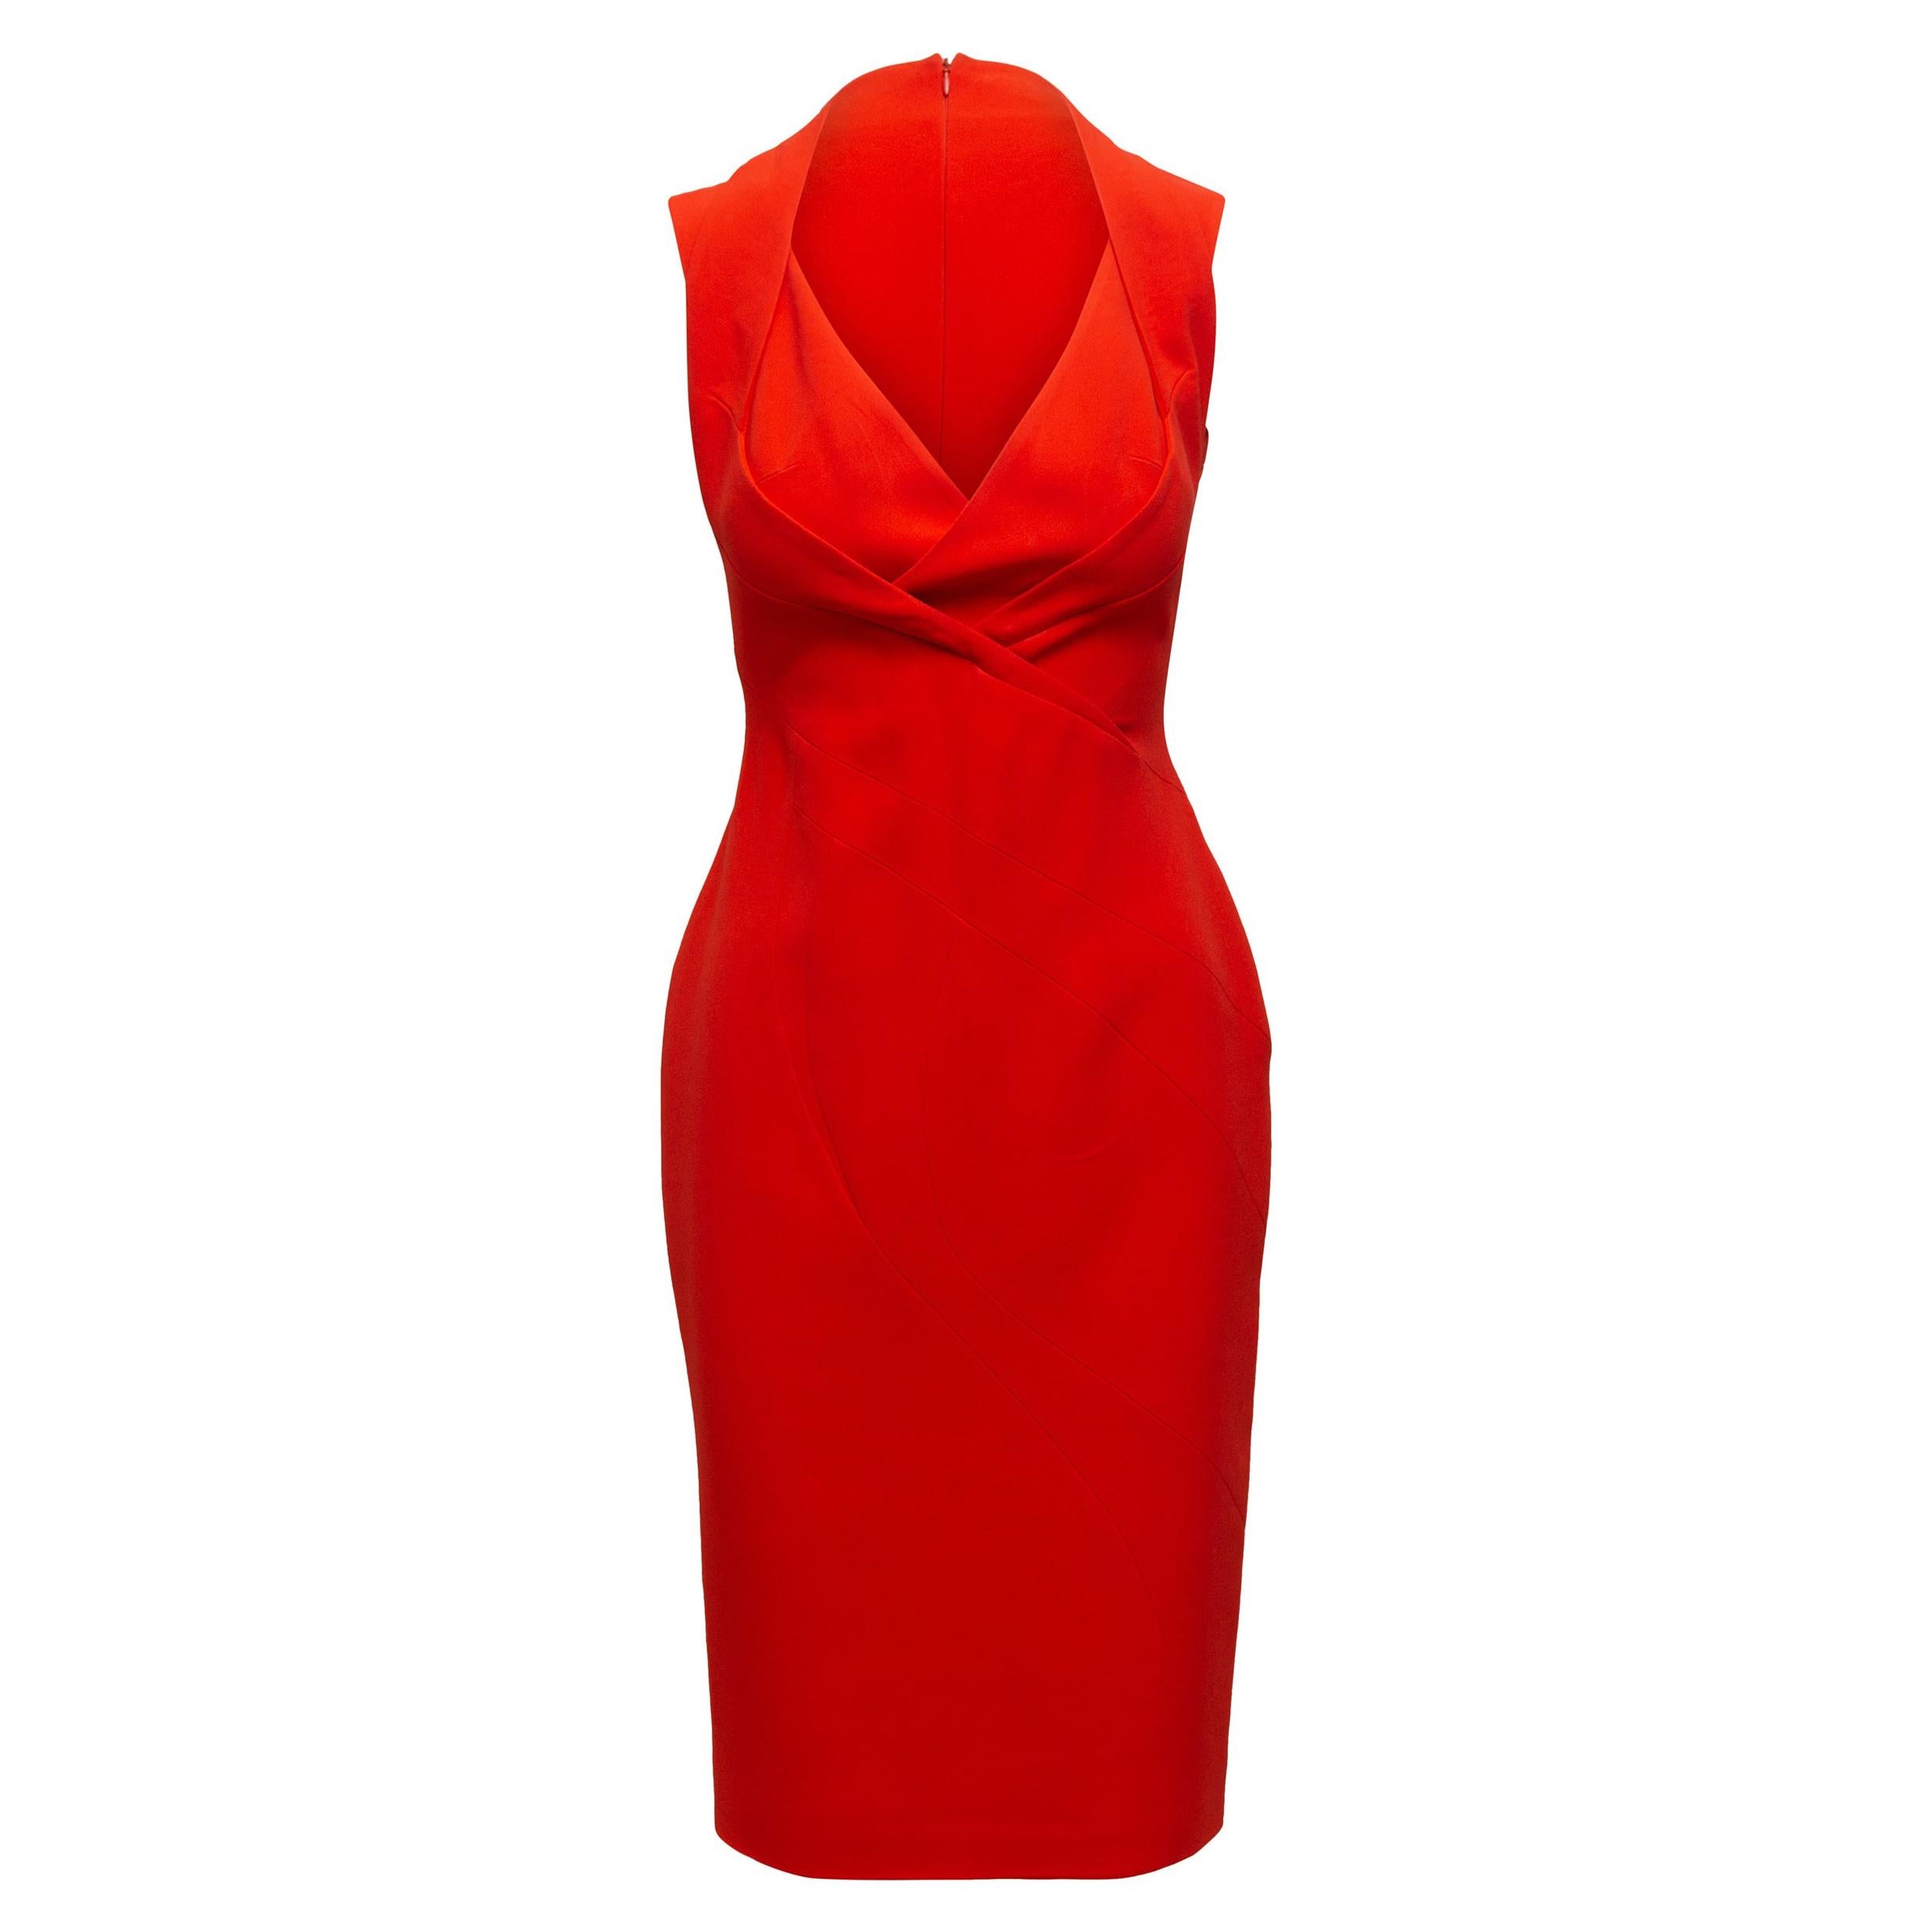 Red-Orange Antonio Berardi Sleeveless Sheath Dress